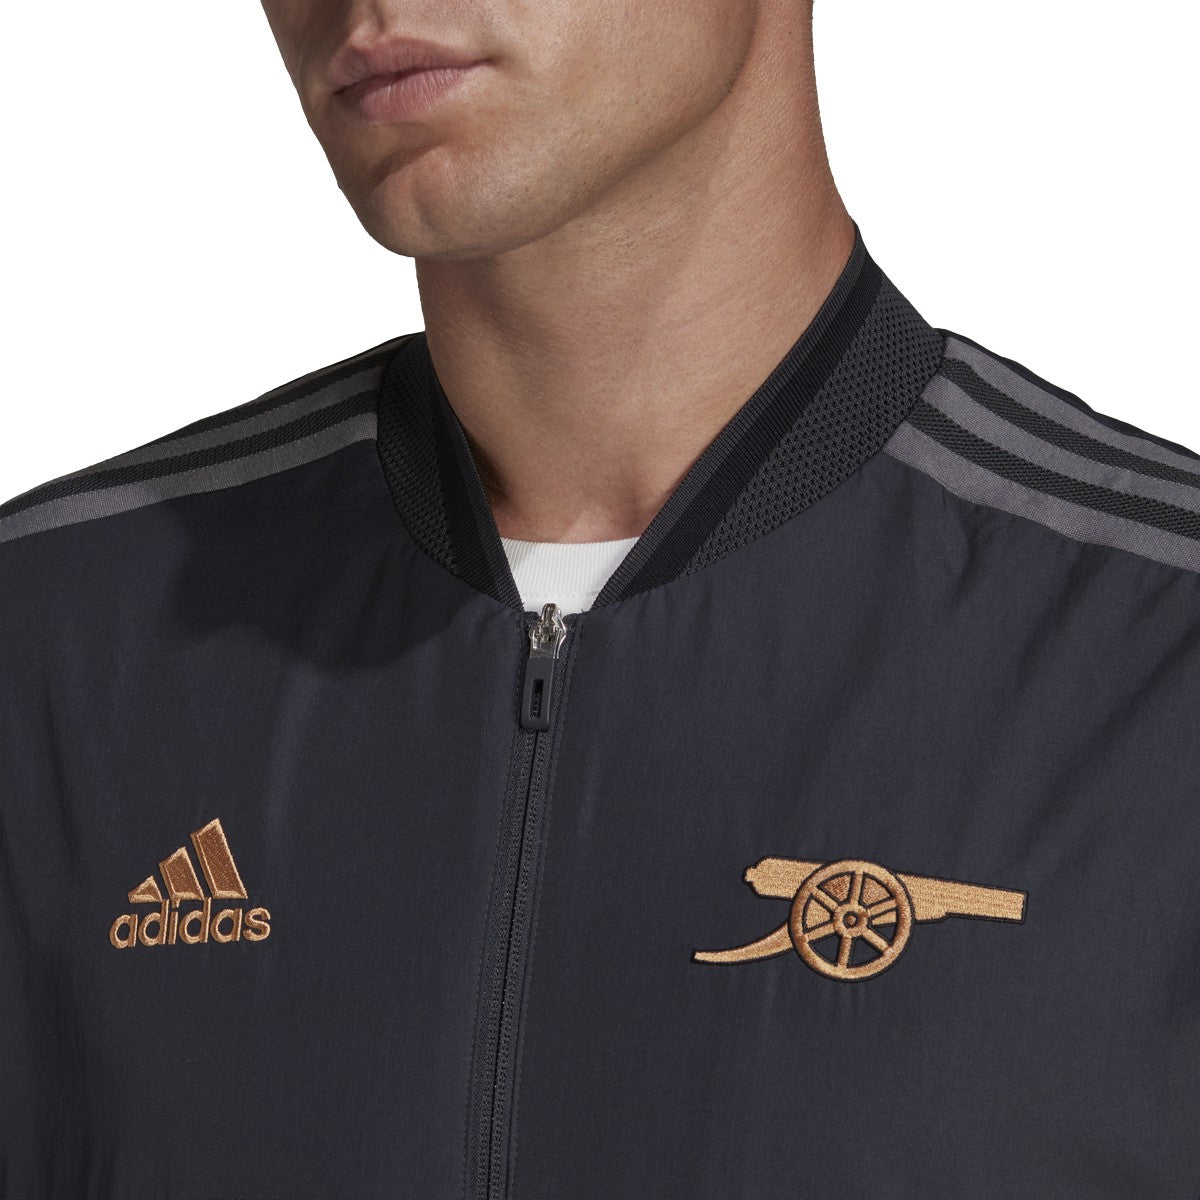 Adidas New York yankees jacket with Nike Mercurial soccer sneaks destroyed  Part II 